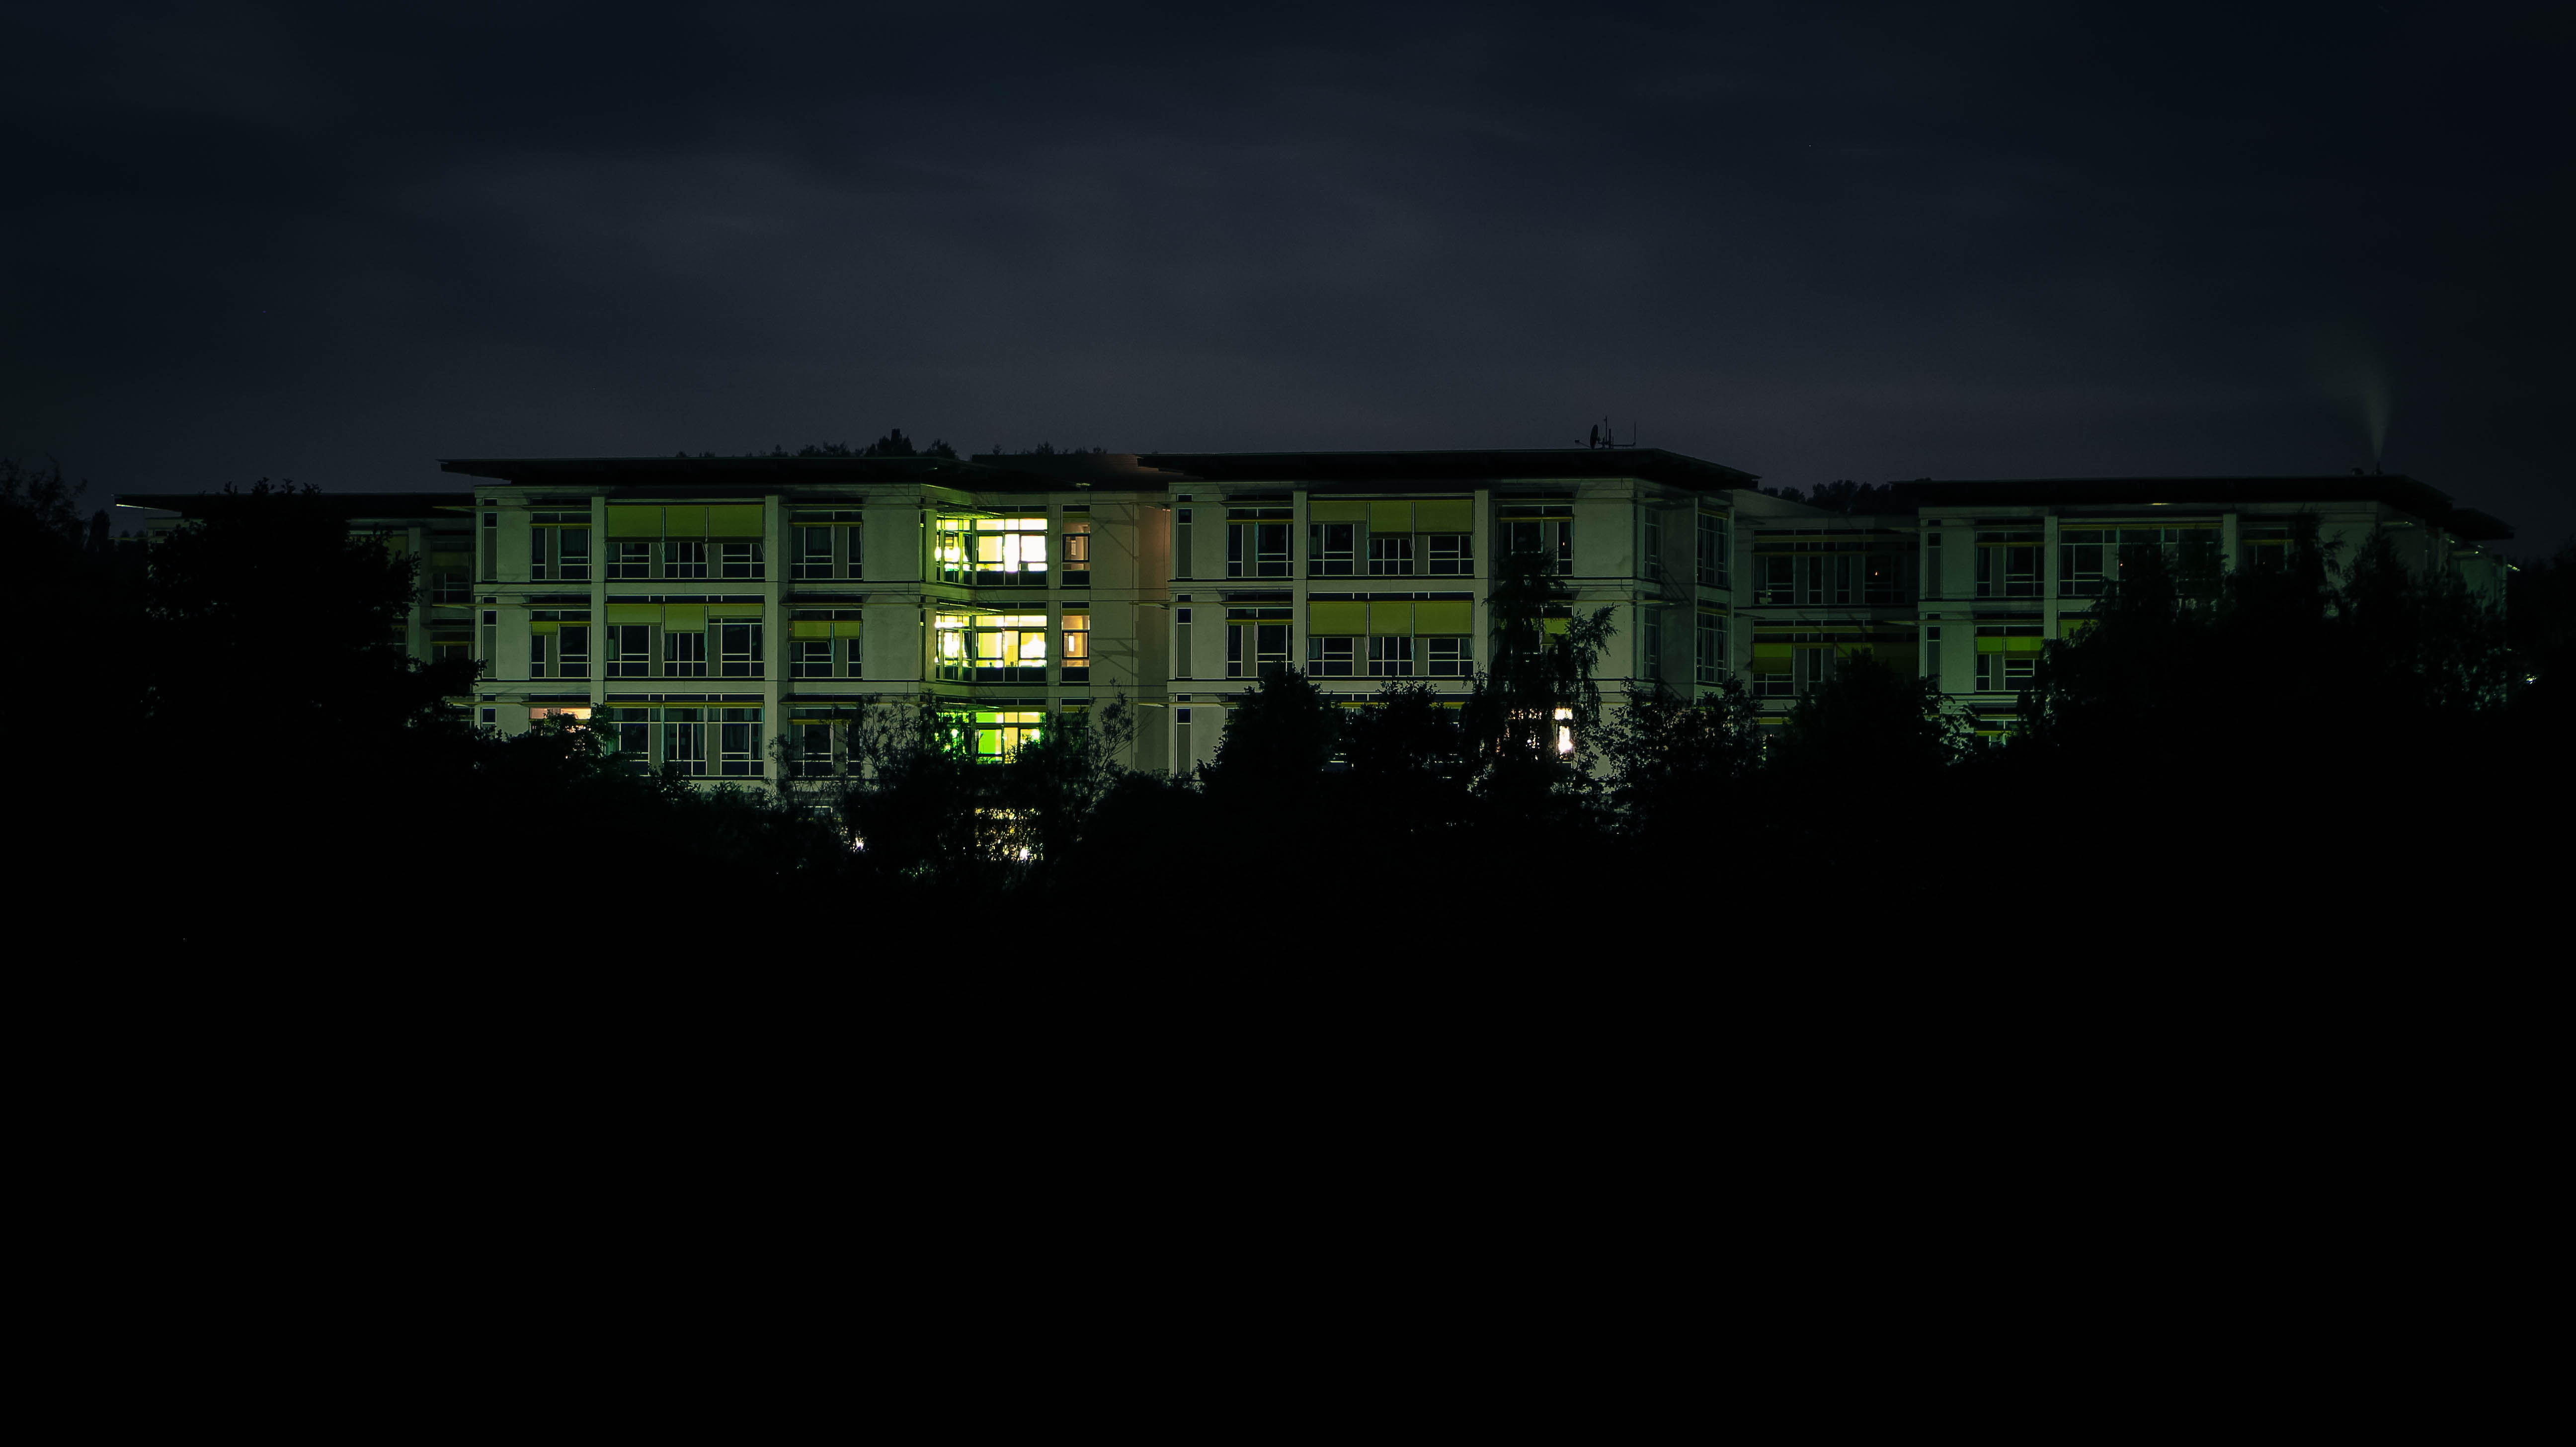 Hospital at night photo